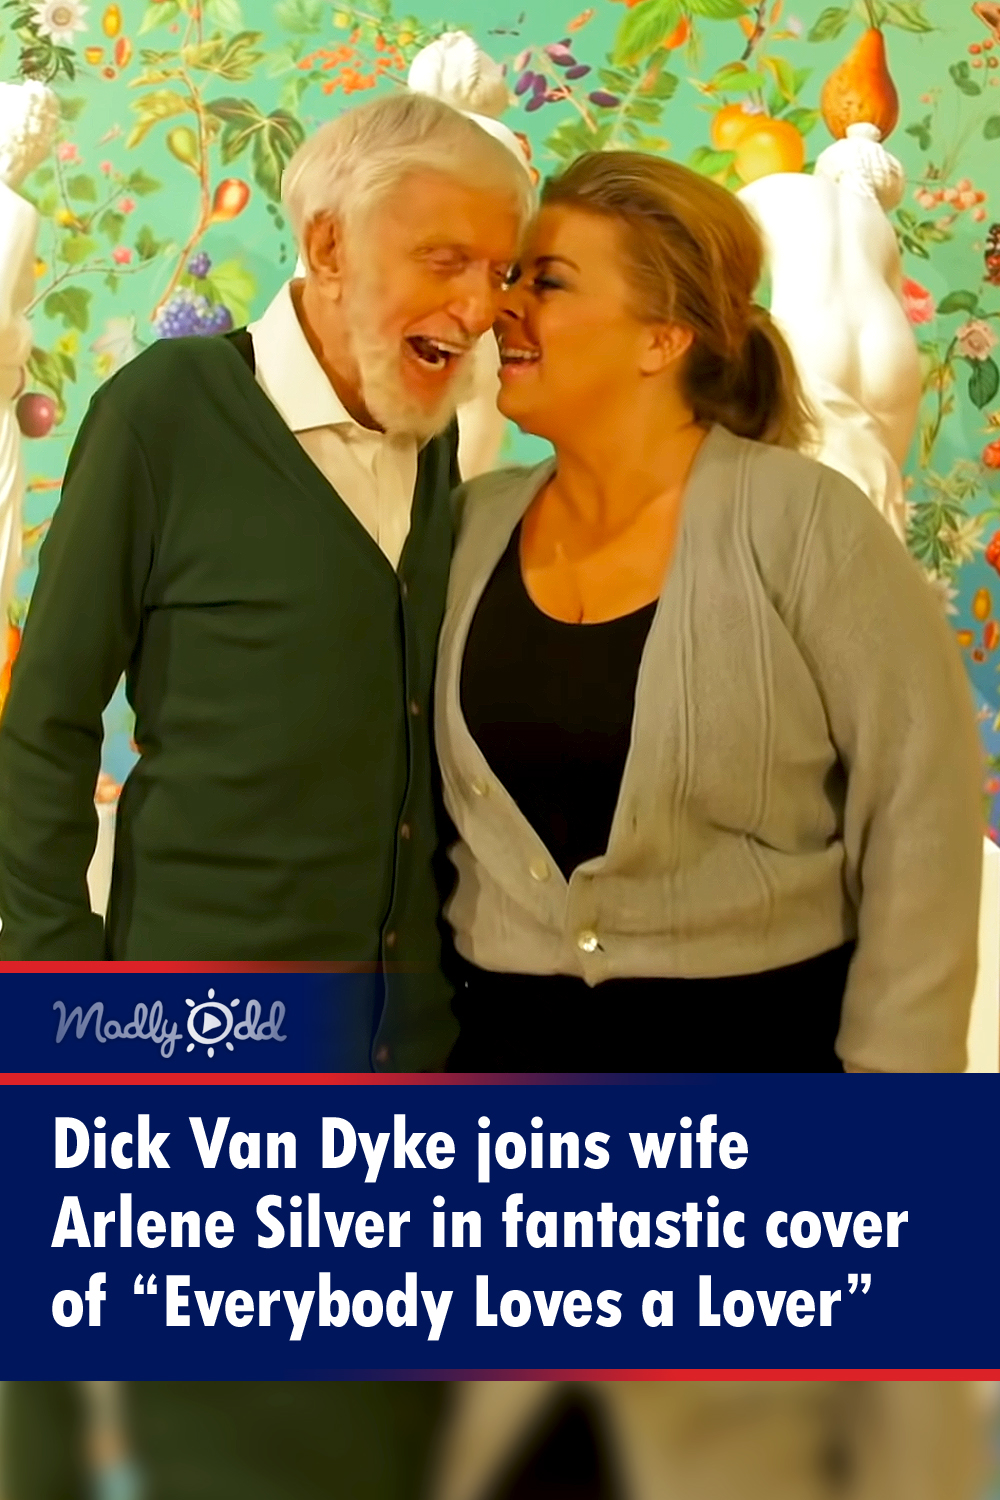 Dick Van Dyke joins wife Arlene Silver in fantastic cover of “Everybody Loves a Lover”